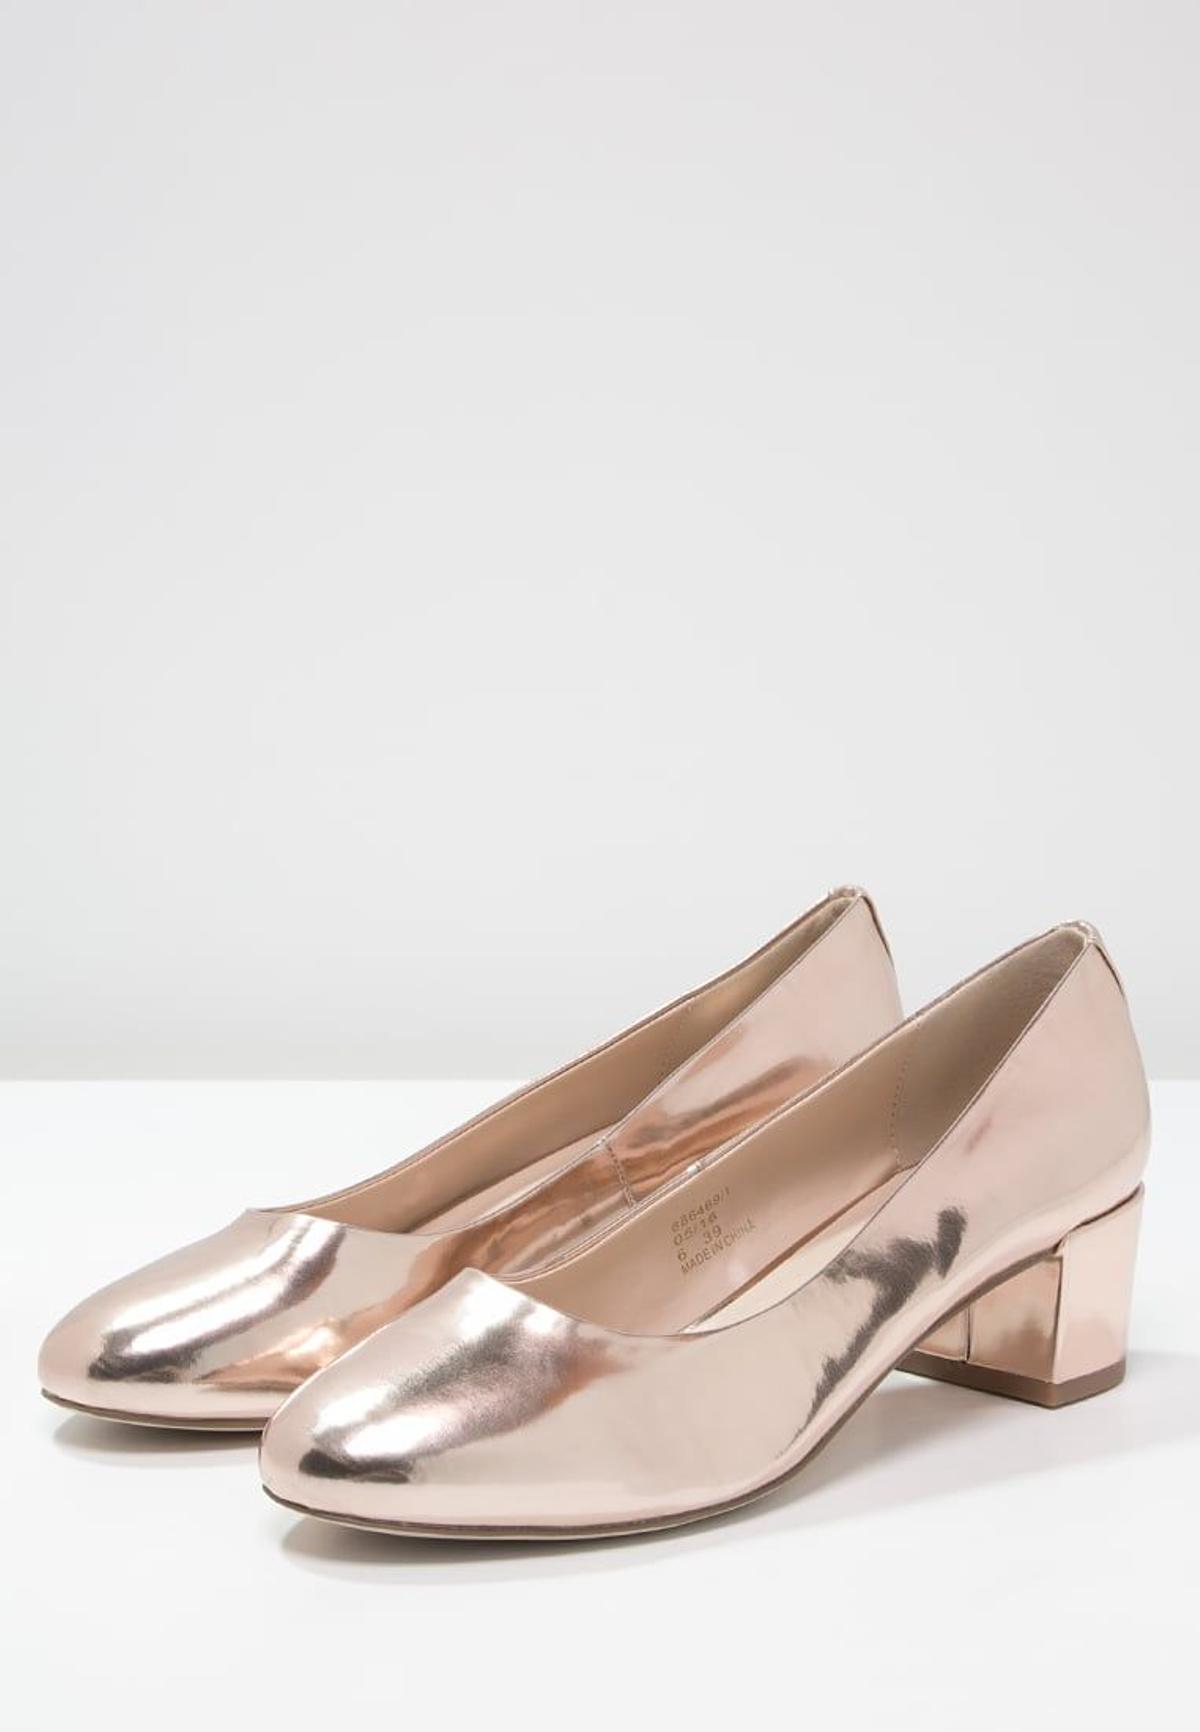 Zapatos en oro rosa y tacón ancho de River Island (39,95 euros)